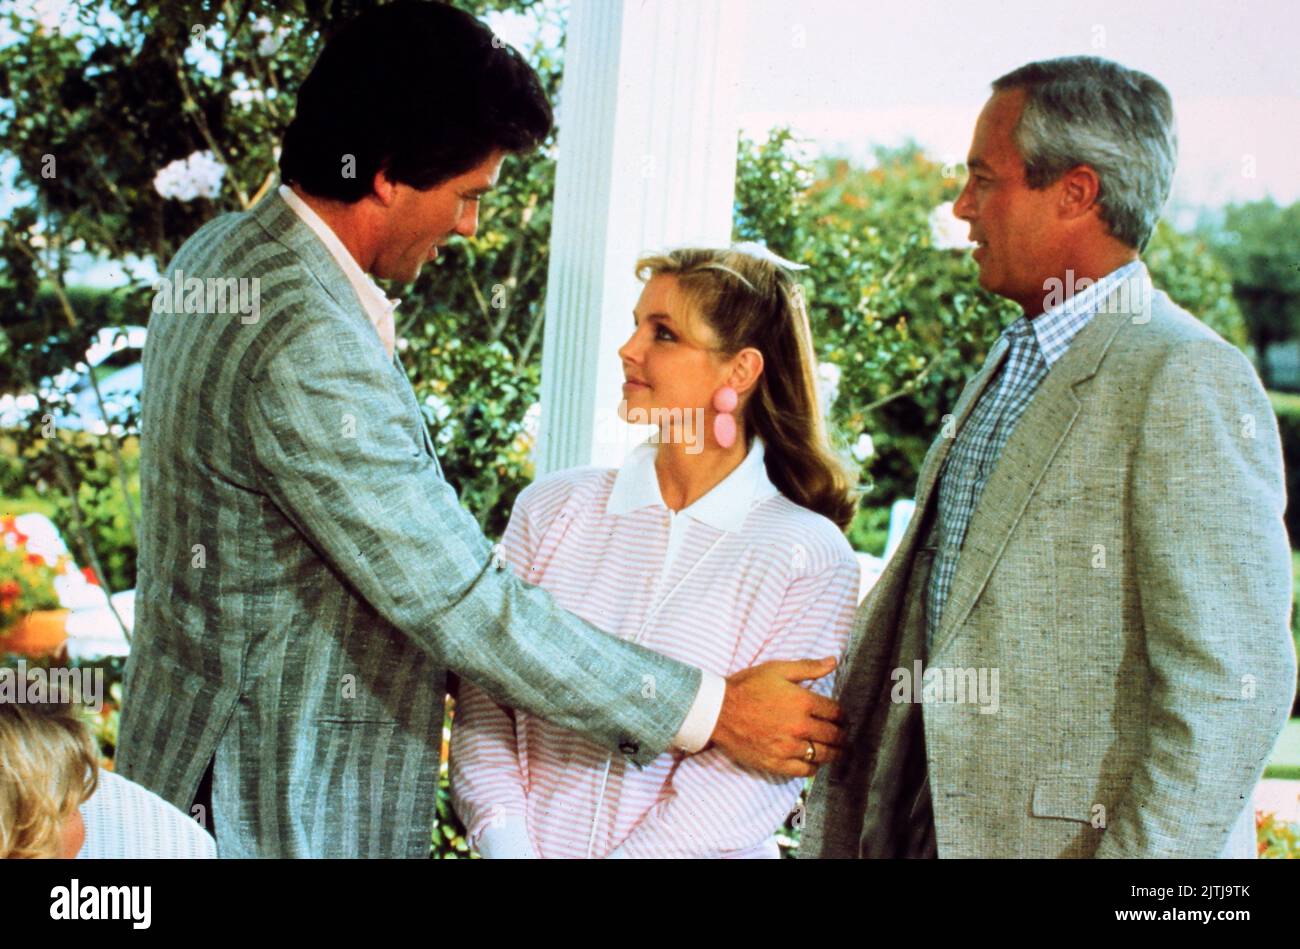 Dallas, Fernsehserie, USA 1978 - 1991, Darsteller: Patrick Duffy, Priscilla Beaulieu Presley, Steve Kanaly Foto de stock